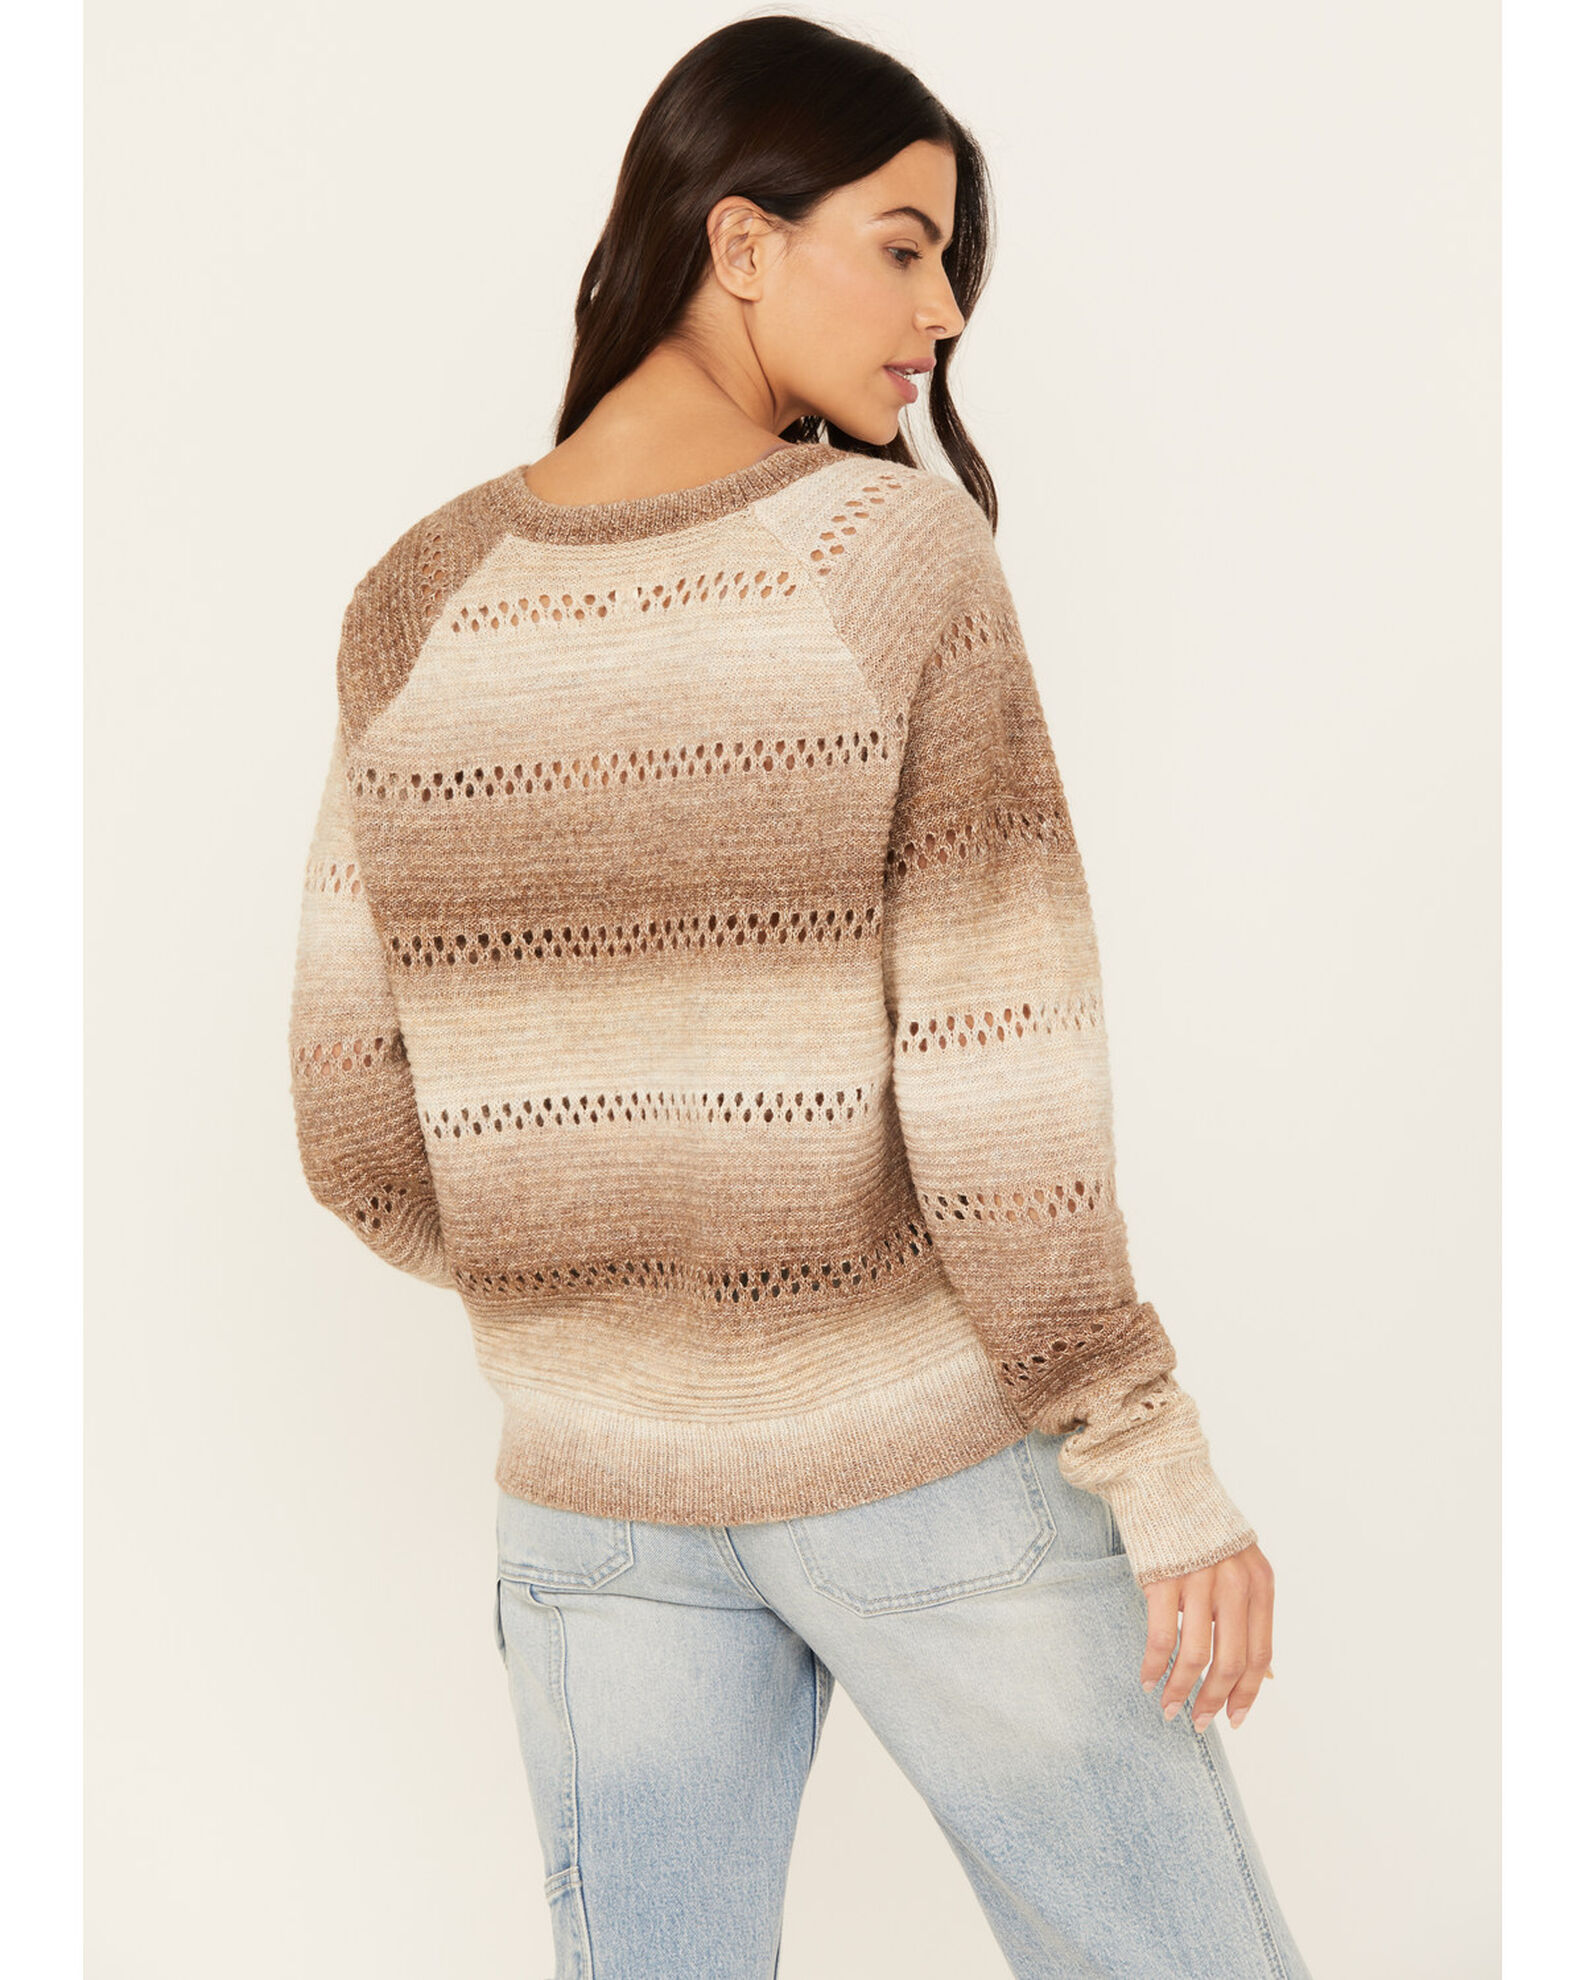 Cleo + Wolf Women's V-Neck Striped Sweater